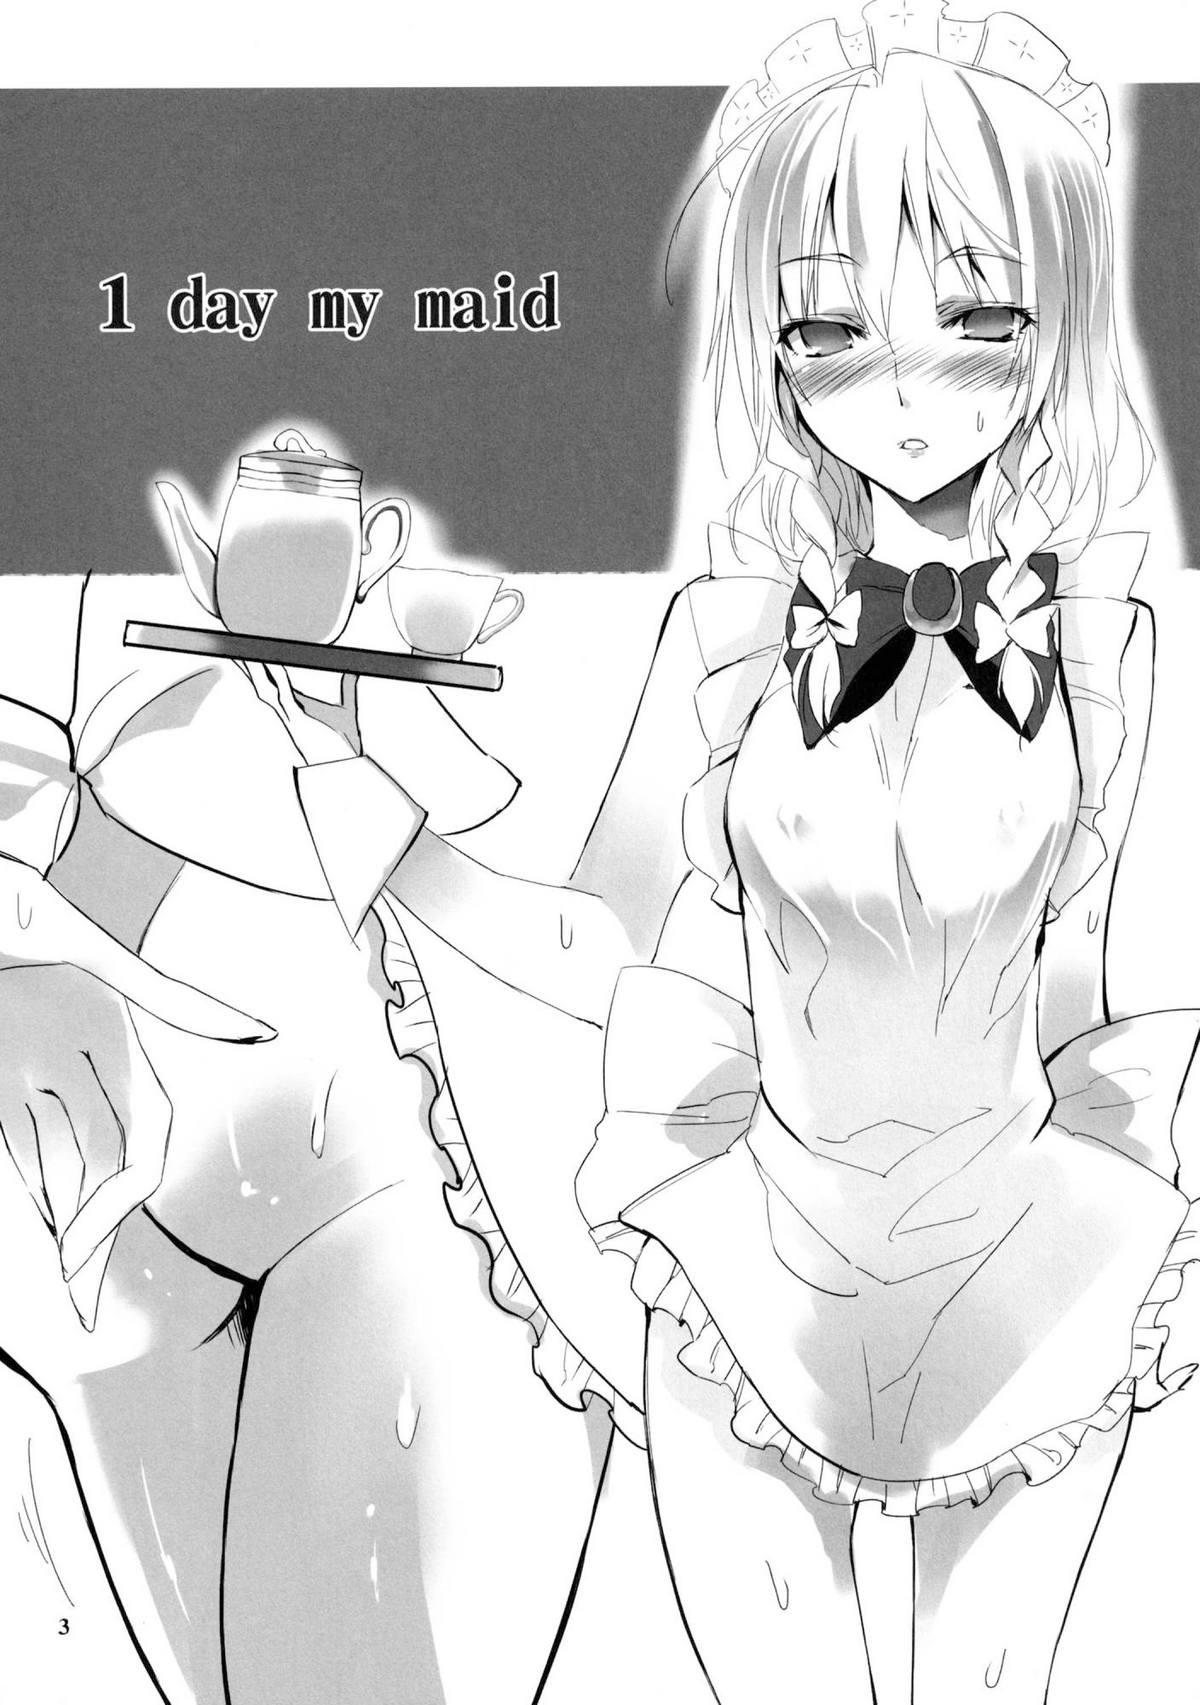 1 day my maid 2